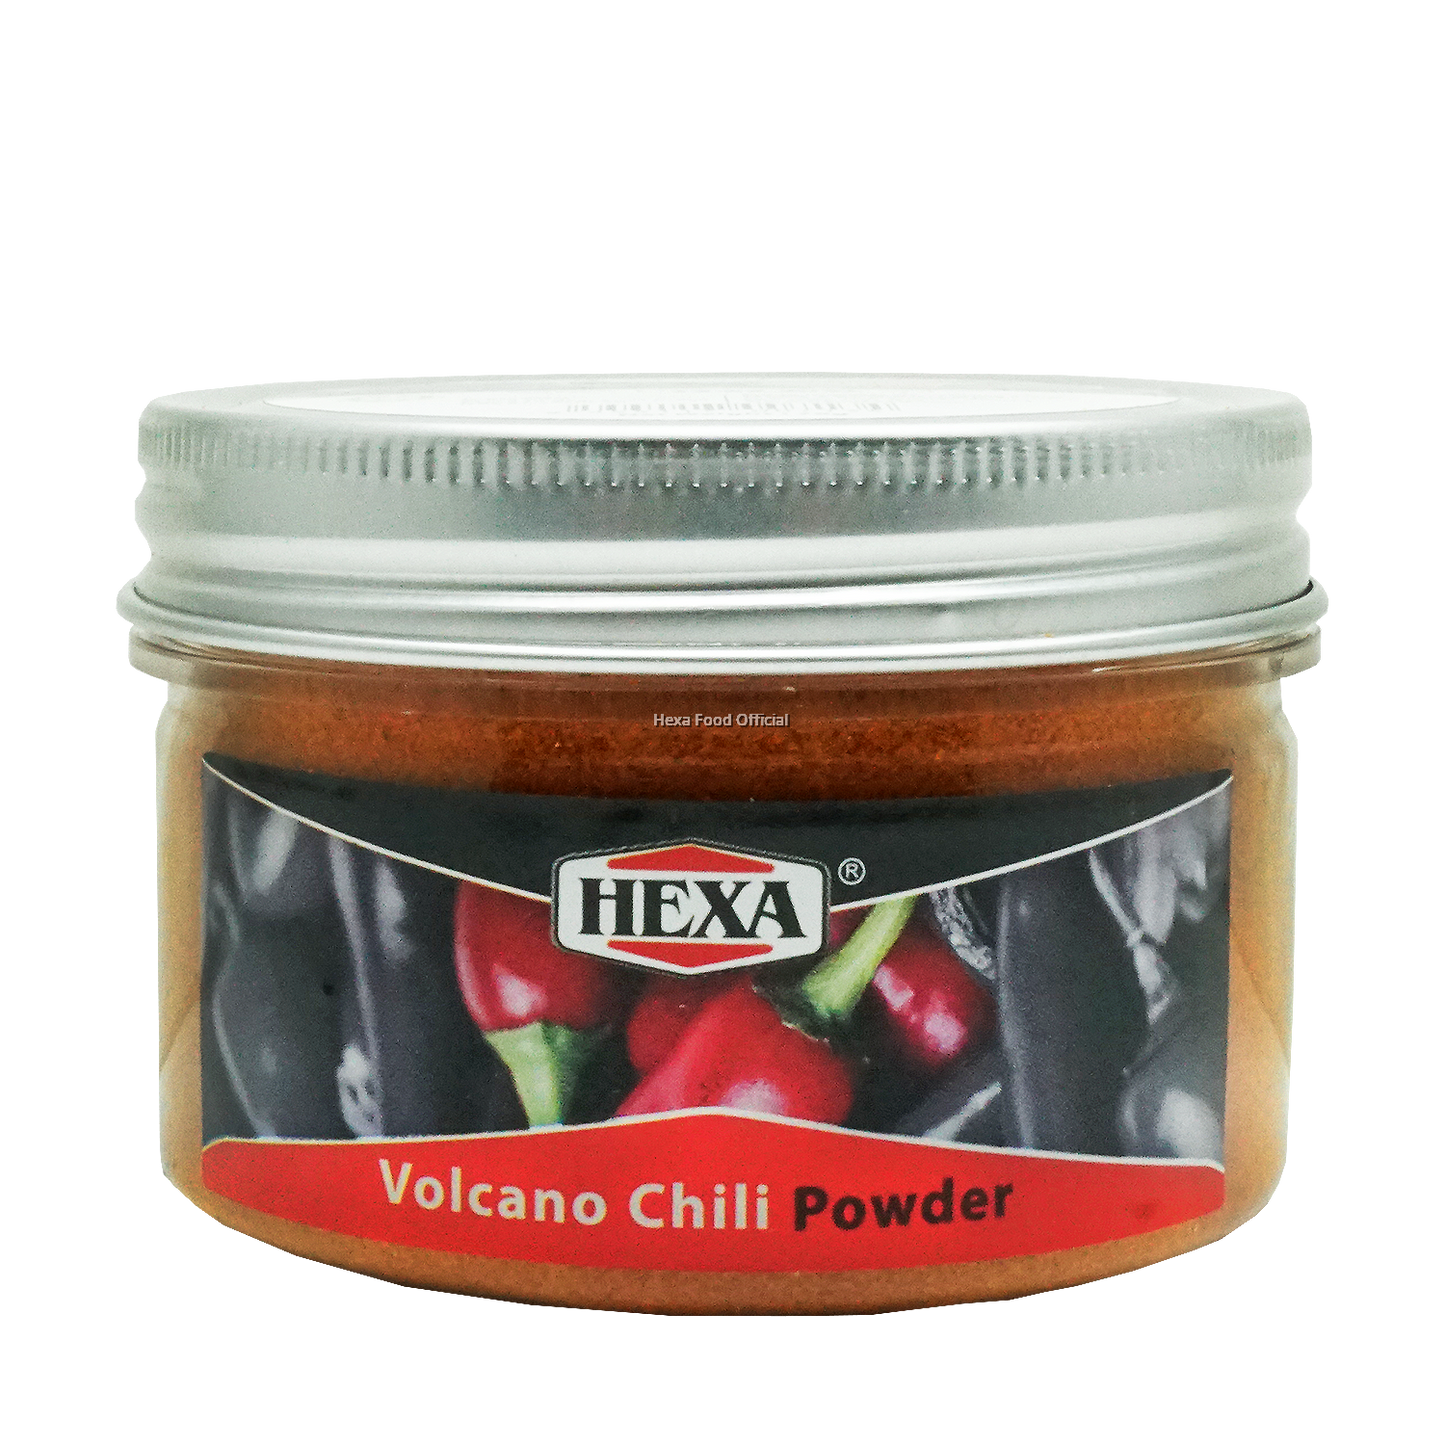 HEXA HALAL Ayam Goreng Berempah 150gm + HEXA HALAL Volcano Chili Powder 70gm